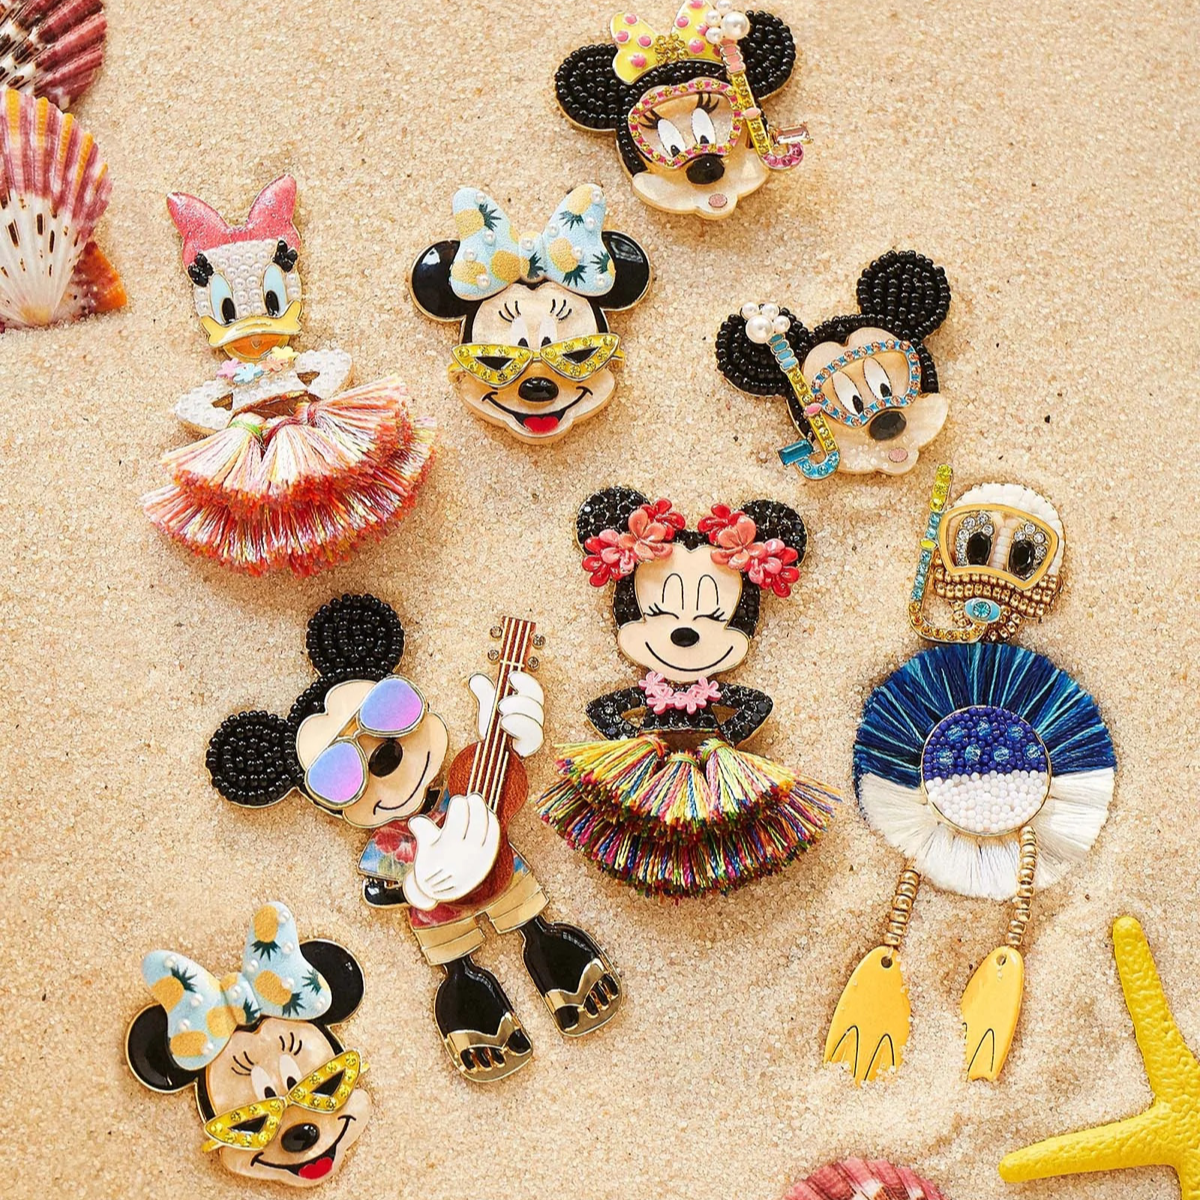 Disney X Baublebar Post Earrings Minnie Mouse - Depop